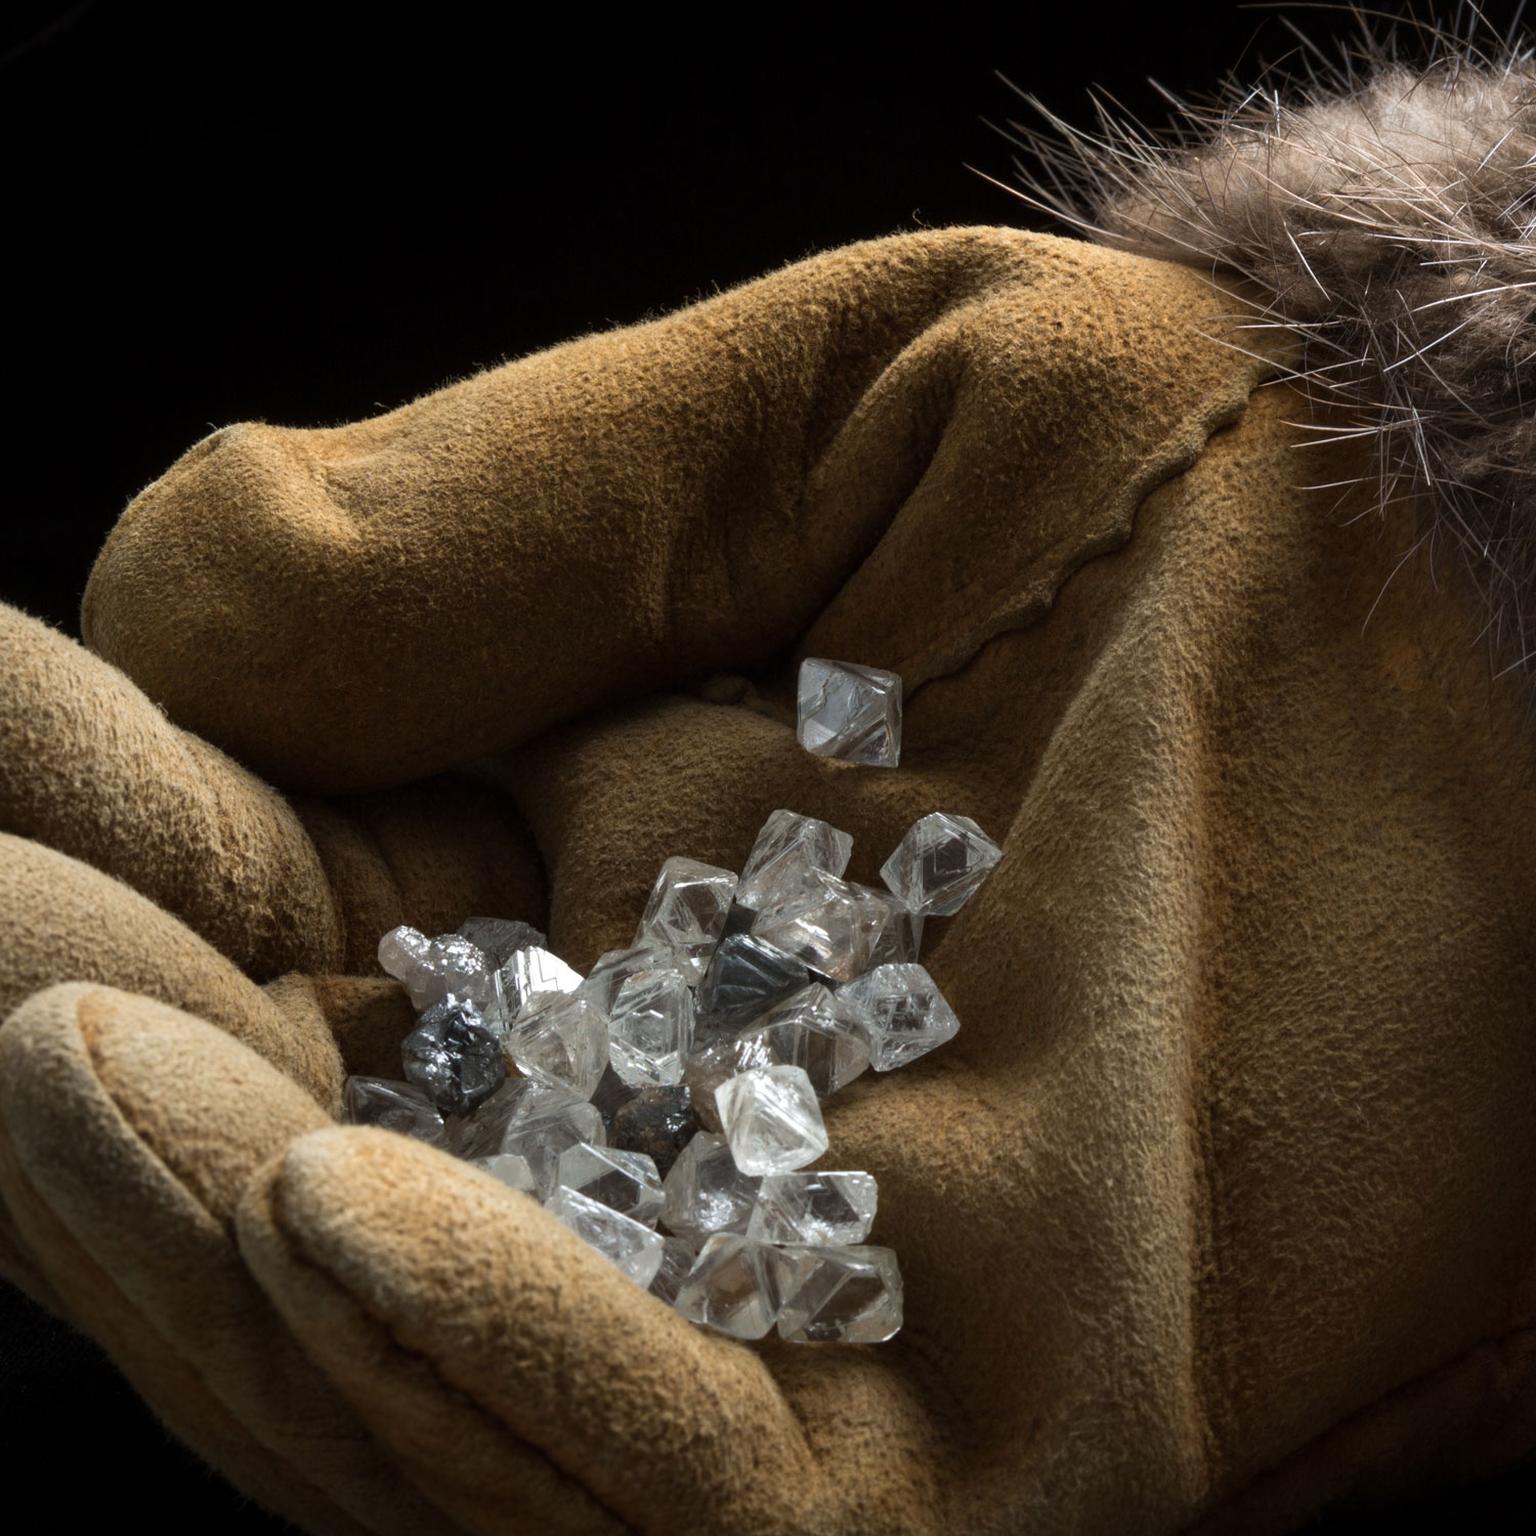 Rough diamonds from the Diavik diamond mine in Canada